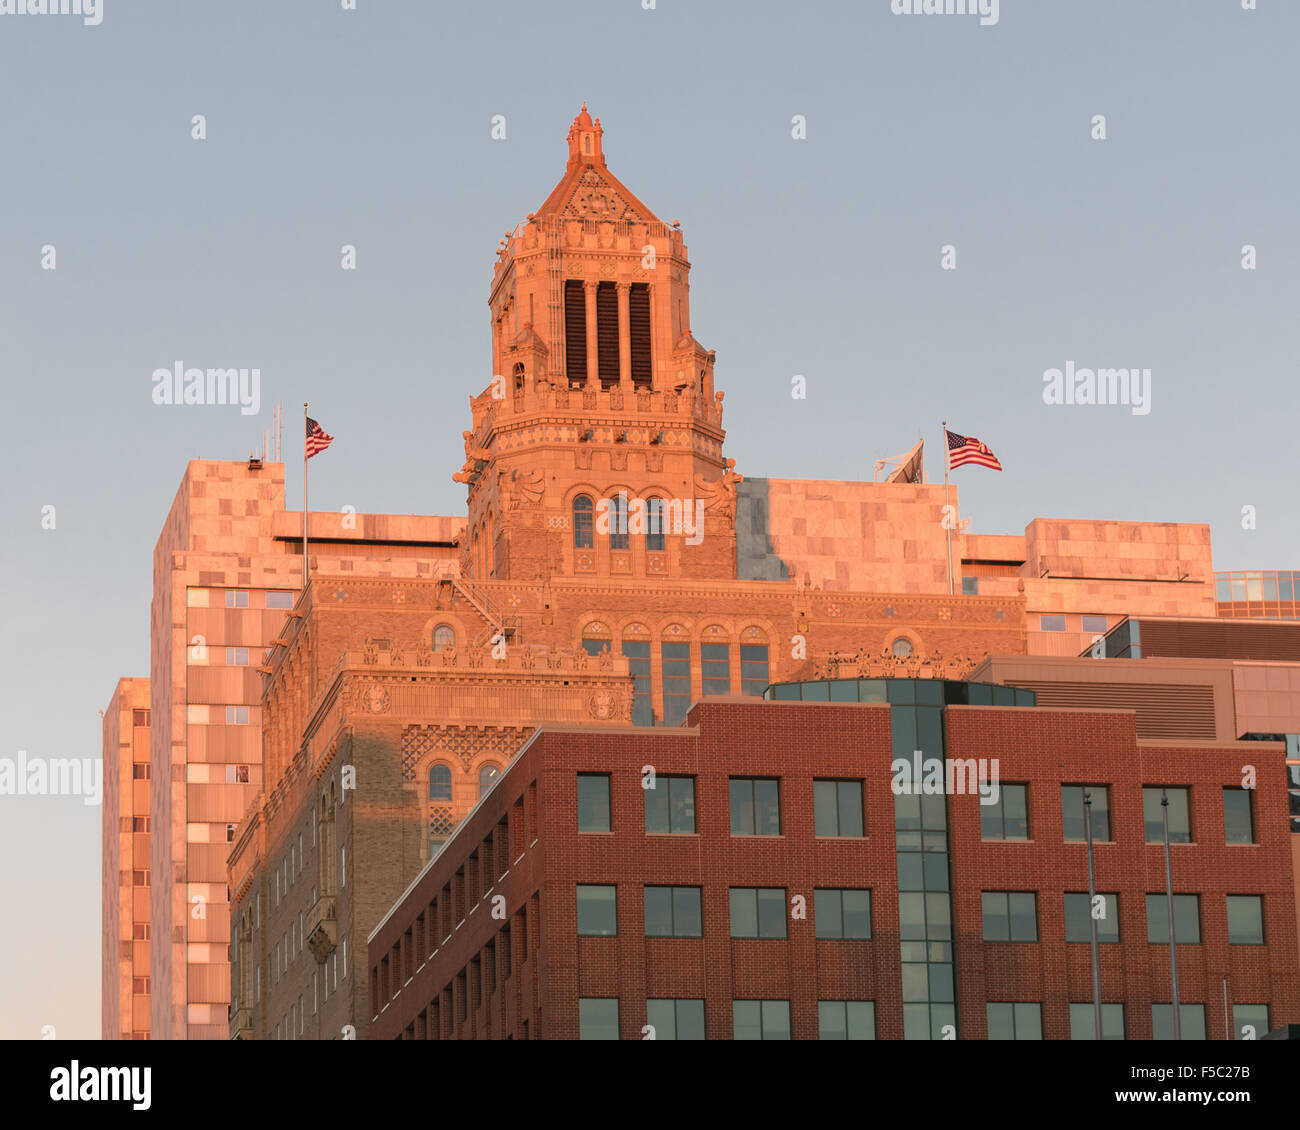 The Plummer Building at sunrise. Stock Photo